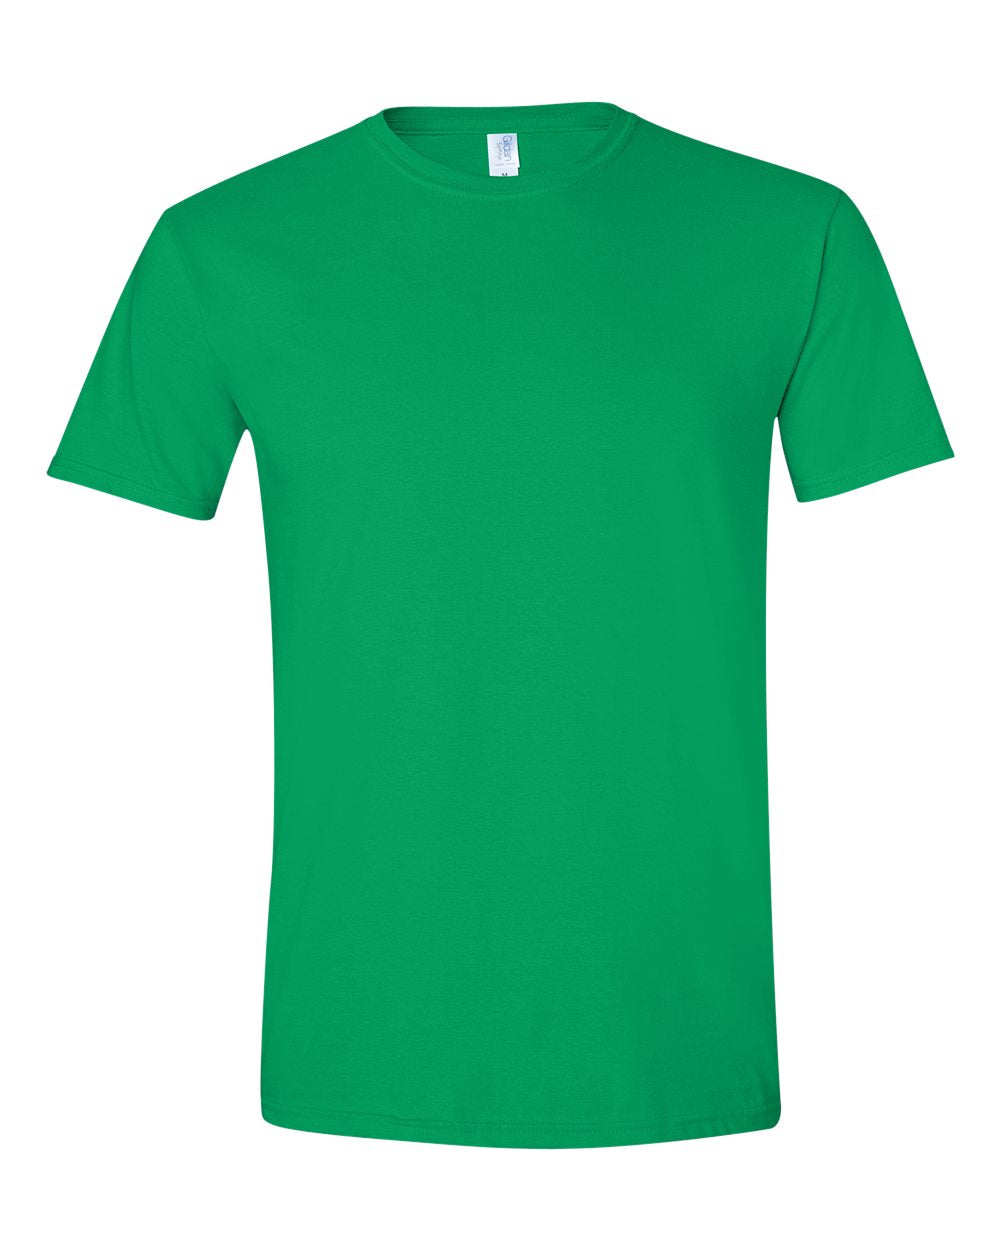 Pretreated Gildan 64000 Softstyle T-Shirt - Irish Green